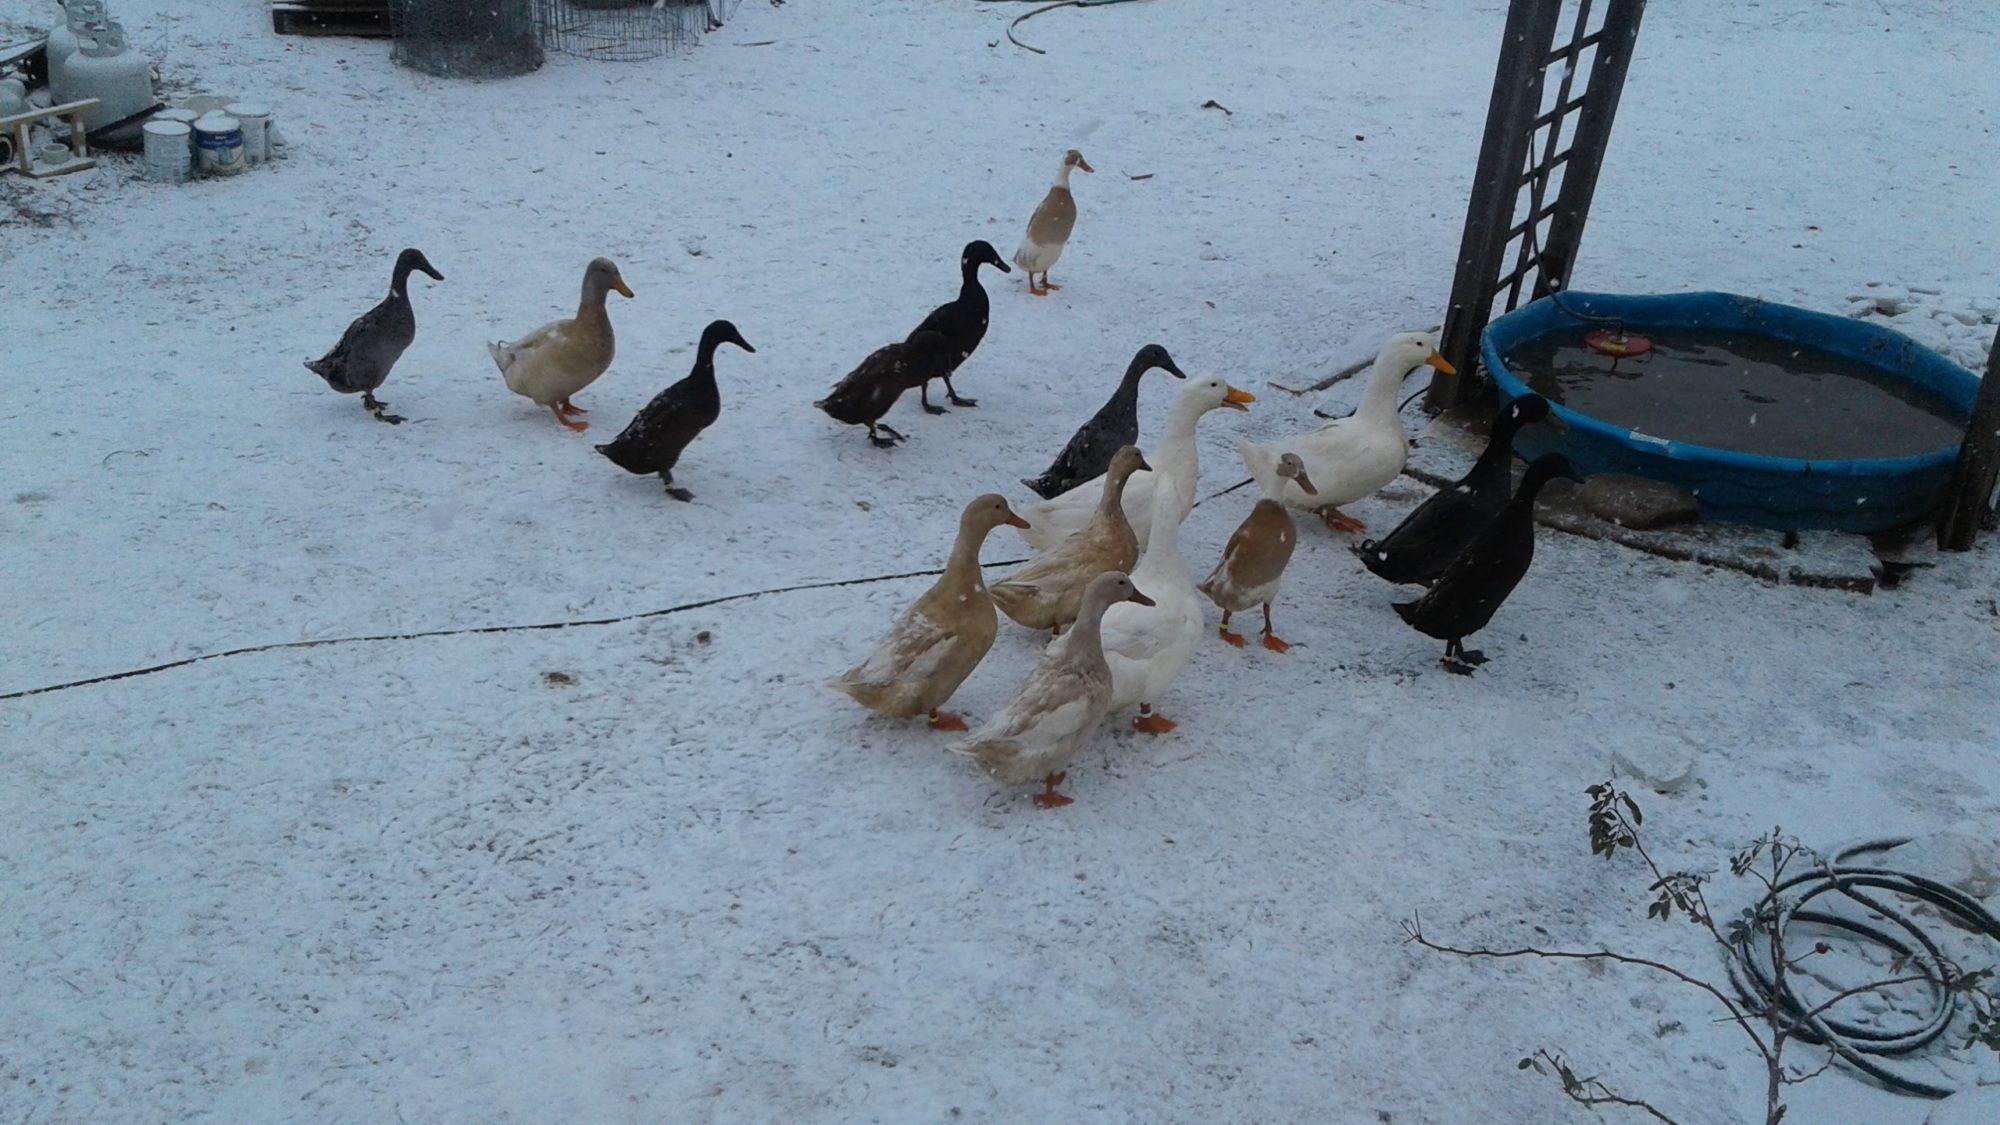 Ducks in winter snow.